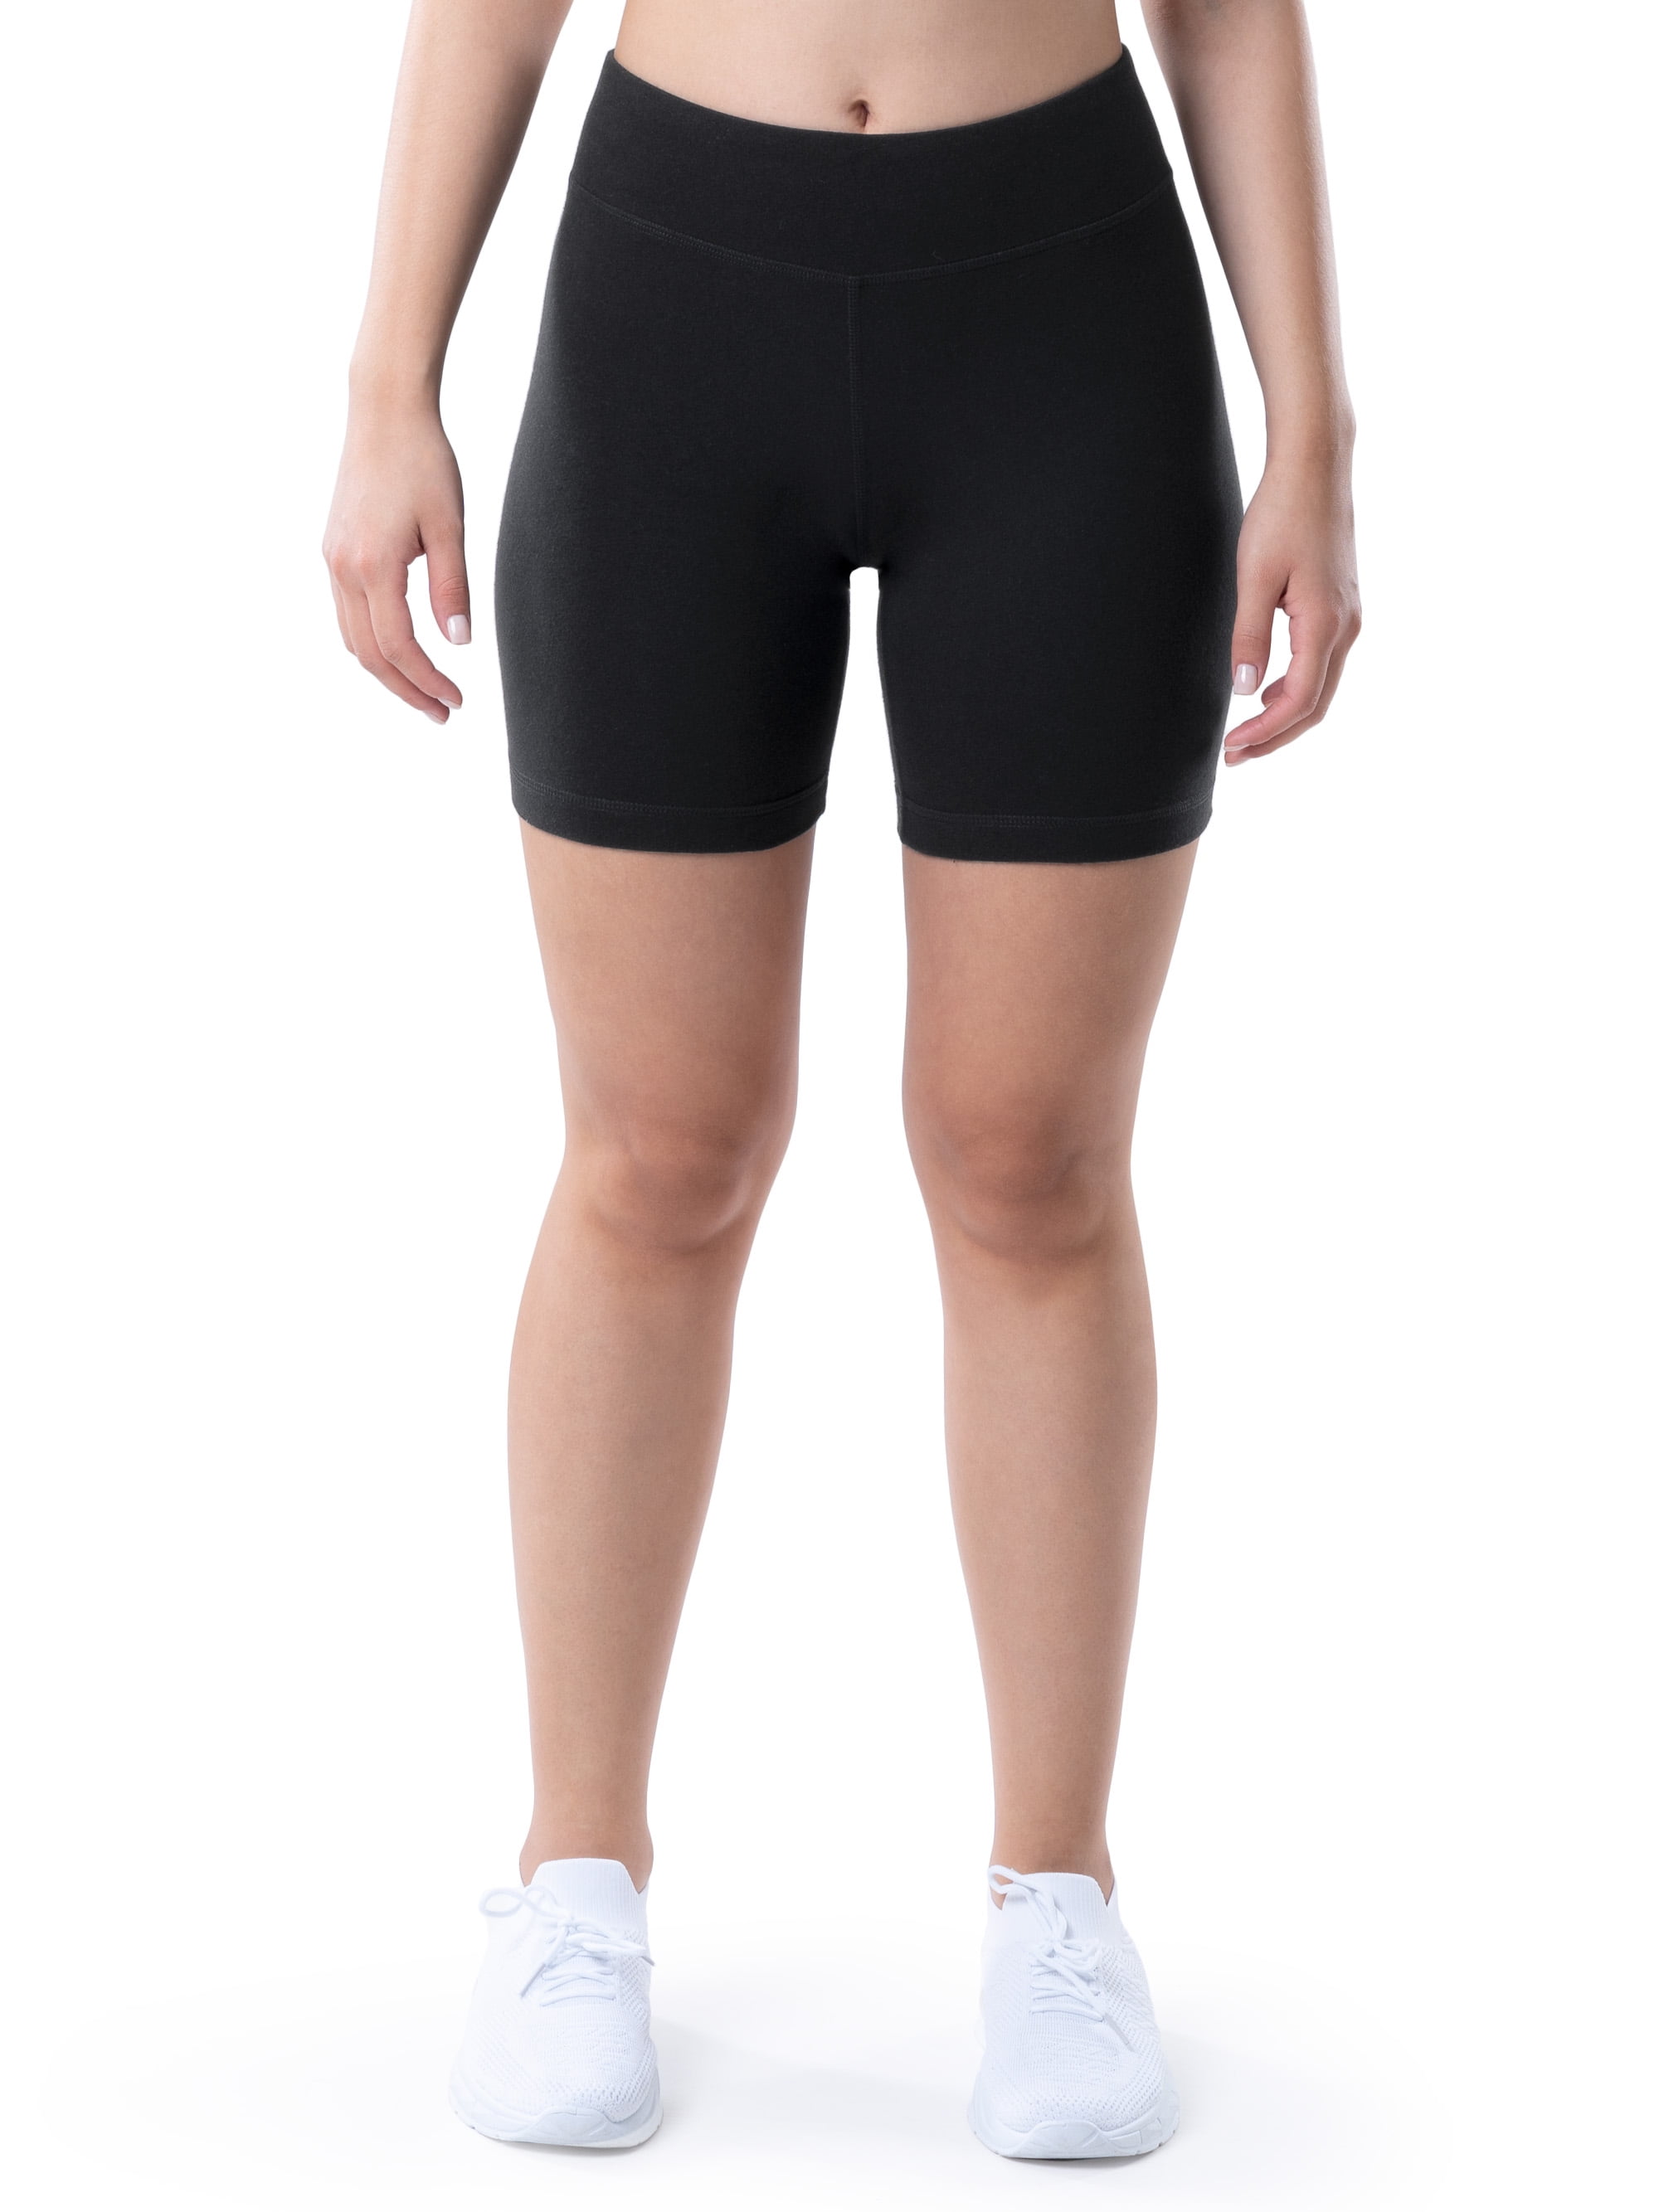 Girls 6.5 Inseam Workout Bike Shorts - Shorts